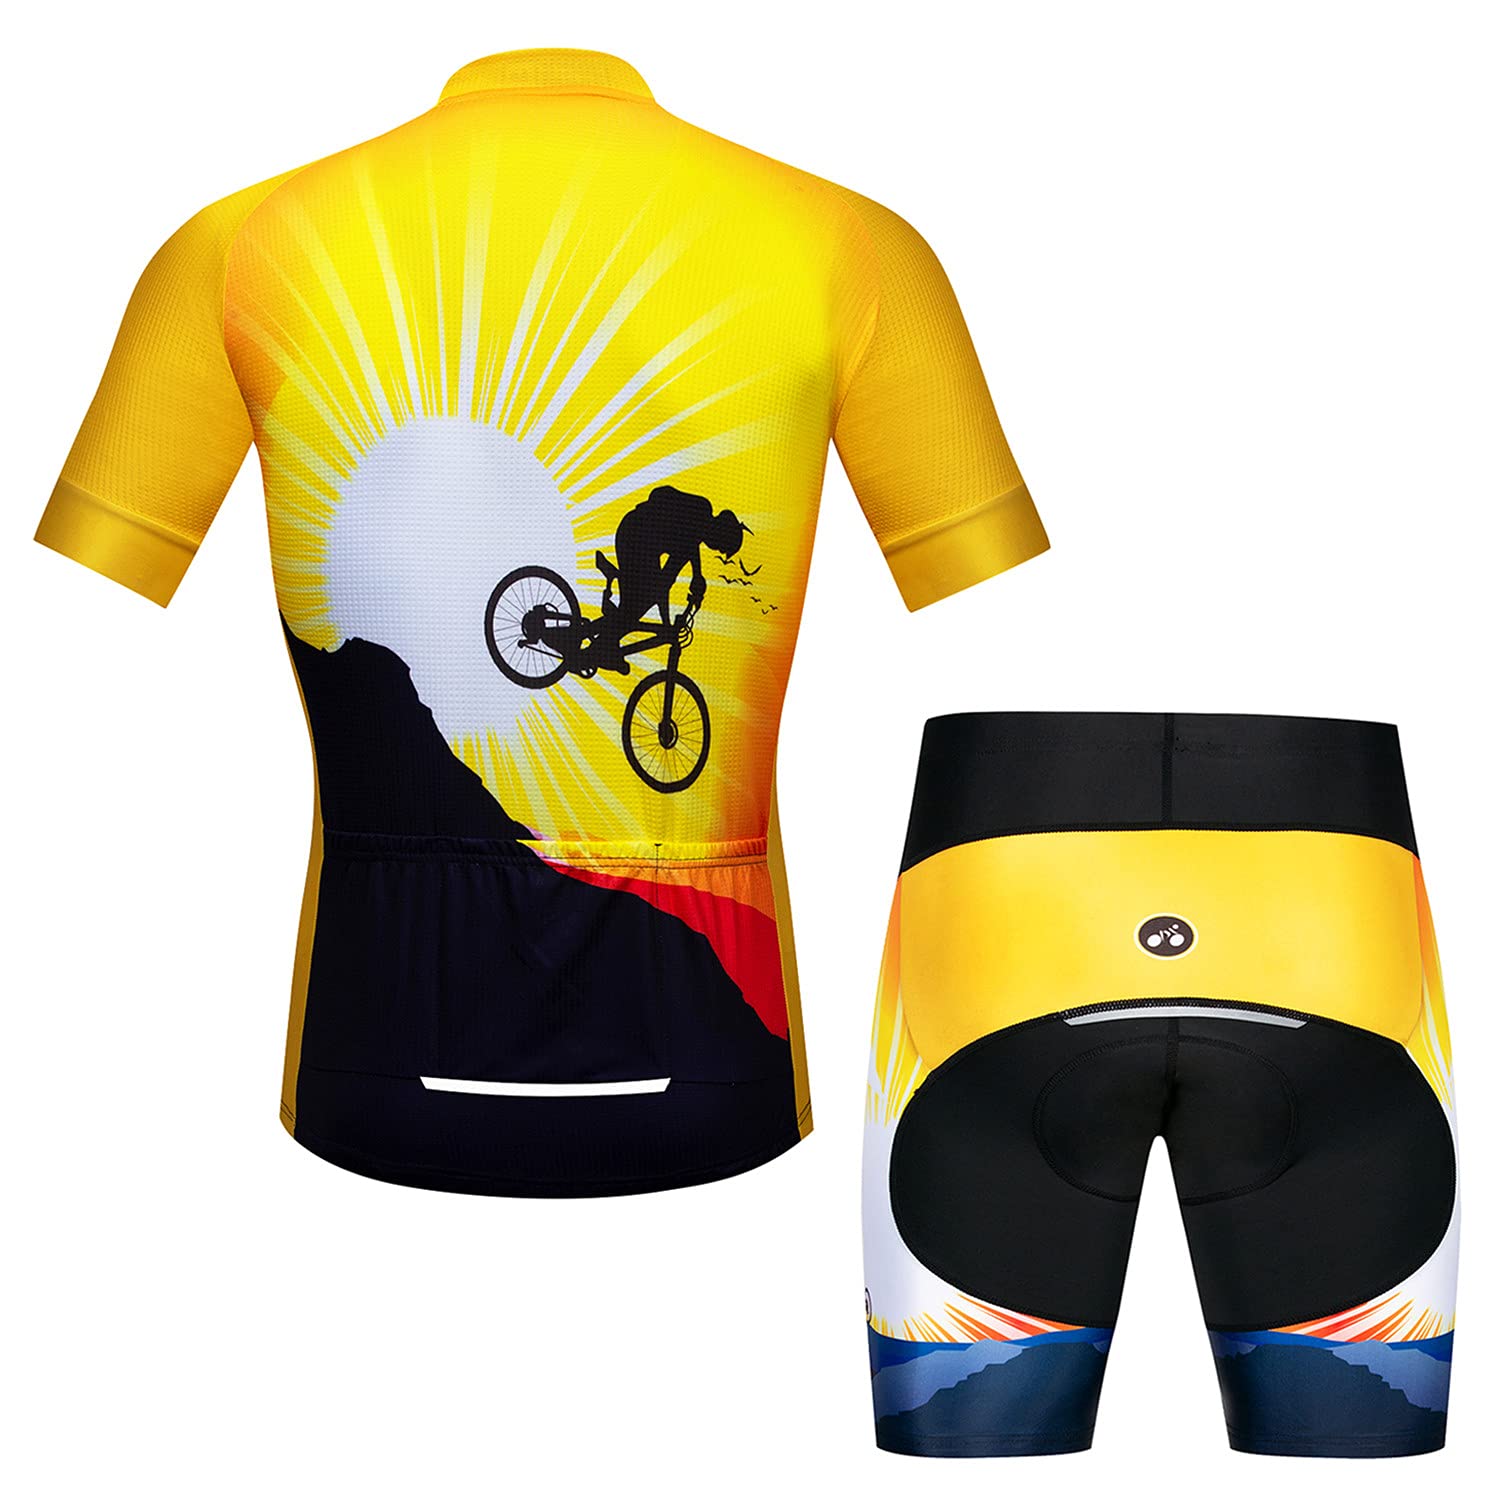 Custom Cycling Jerseys - Personalized Cycling Kit & Tops